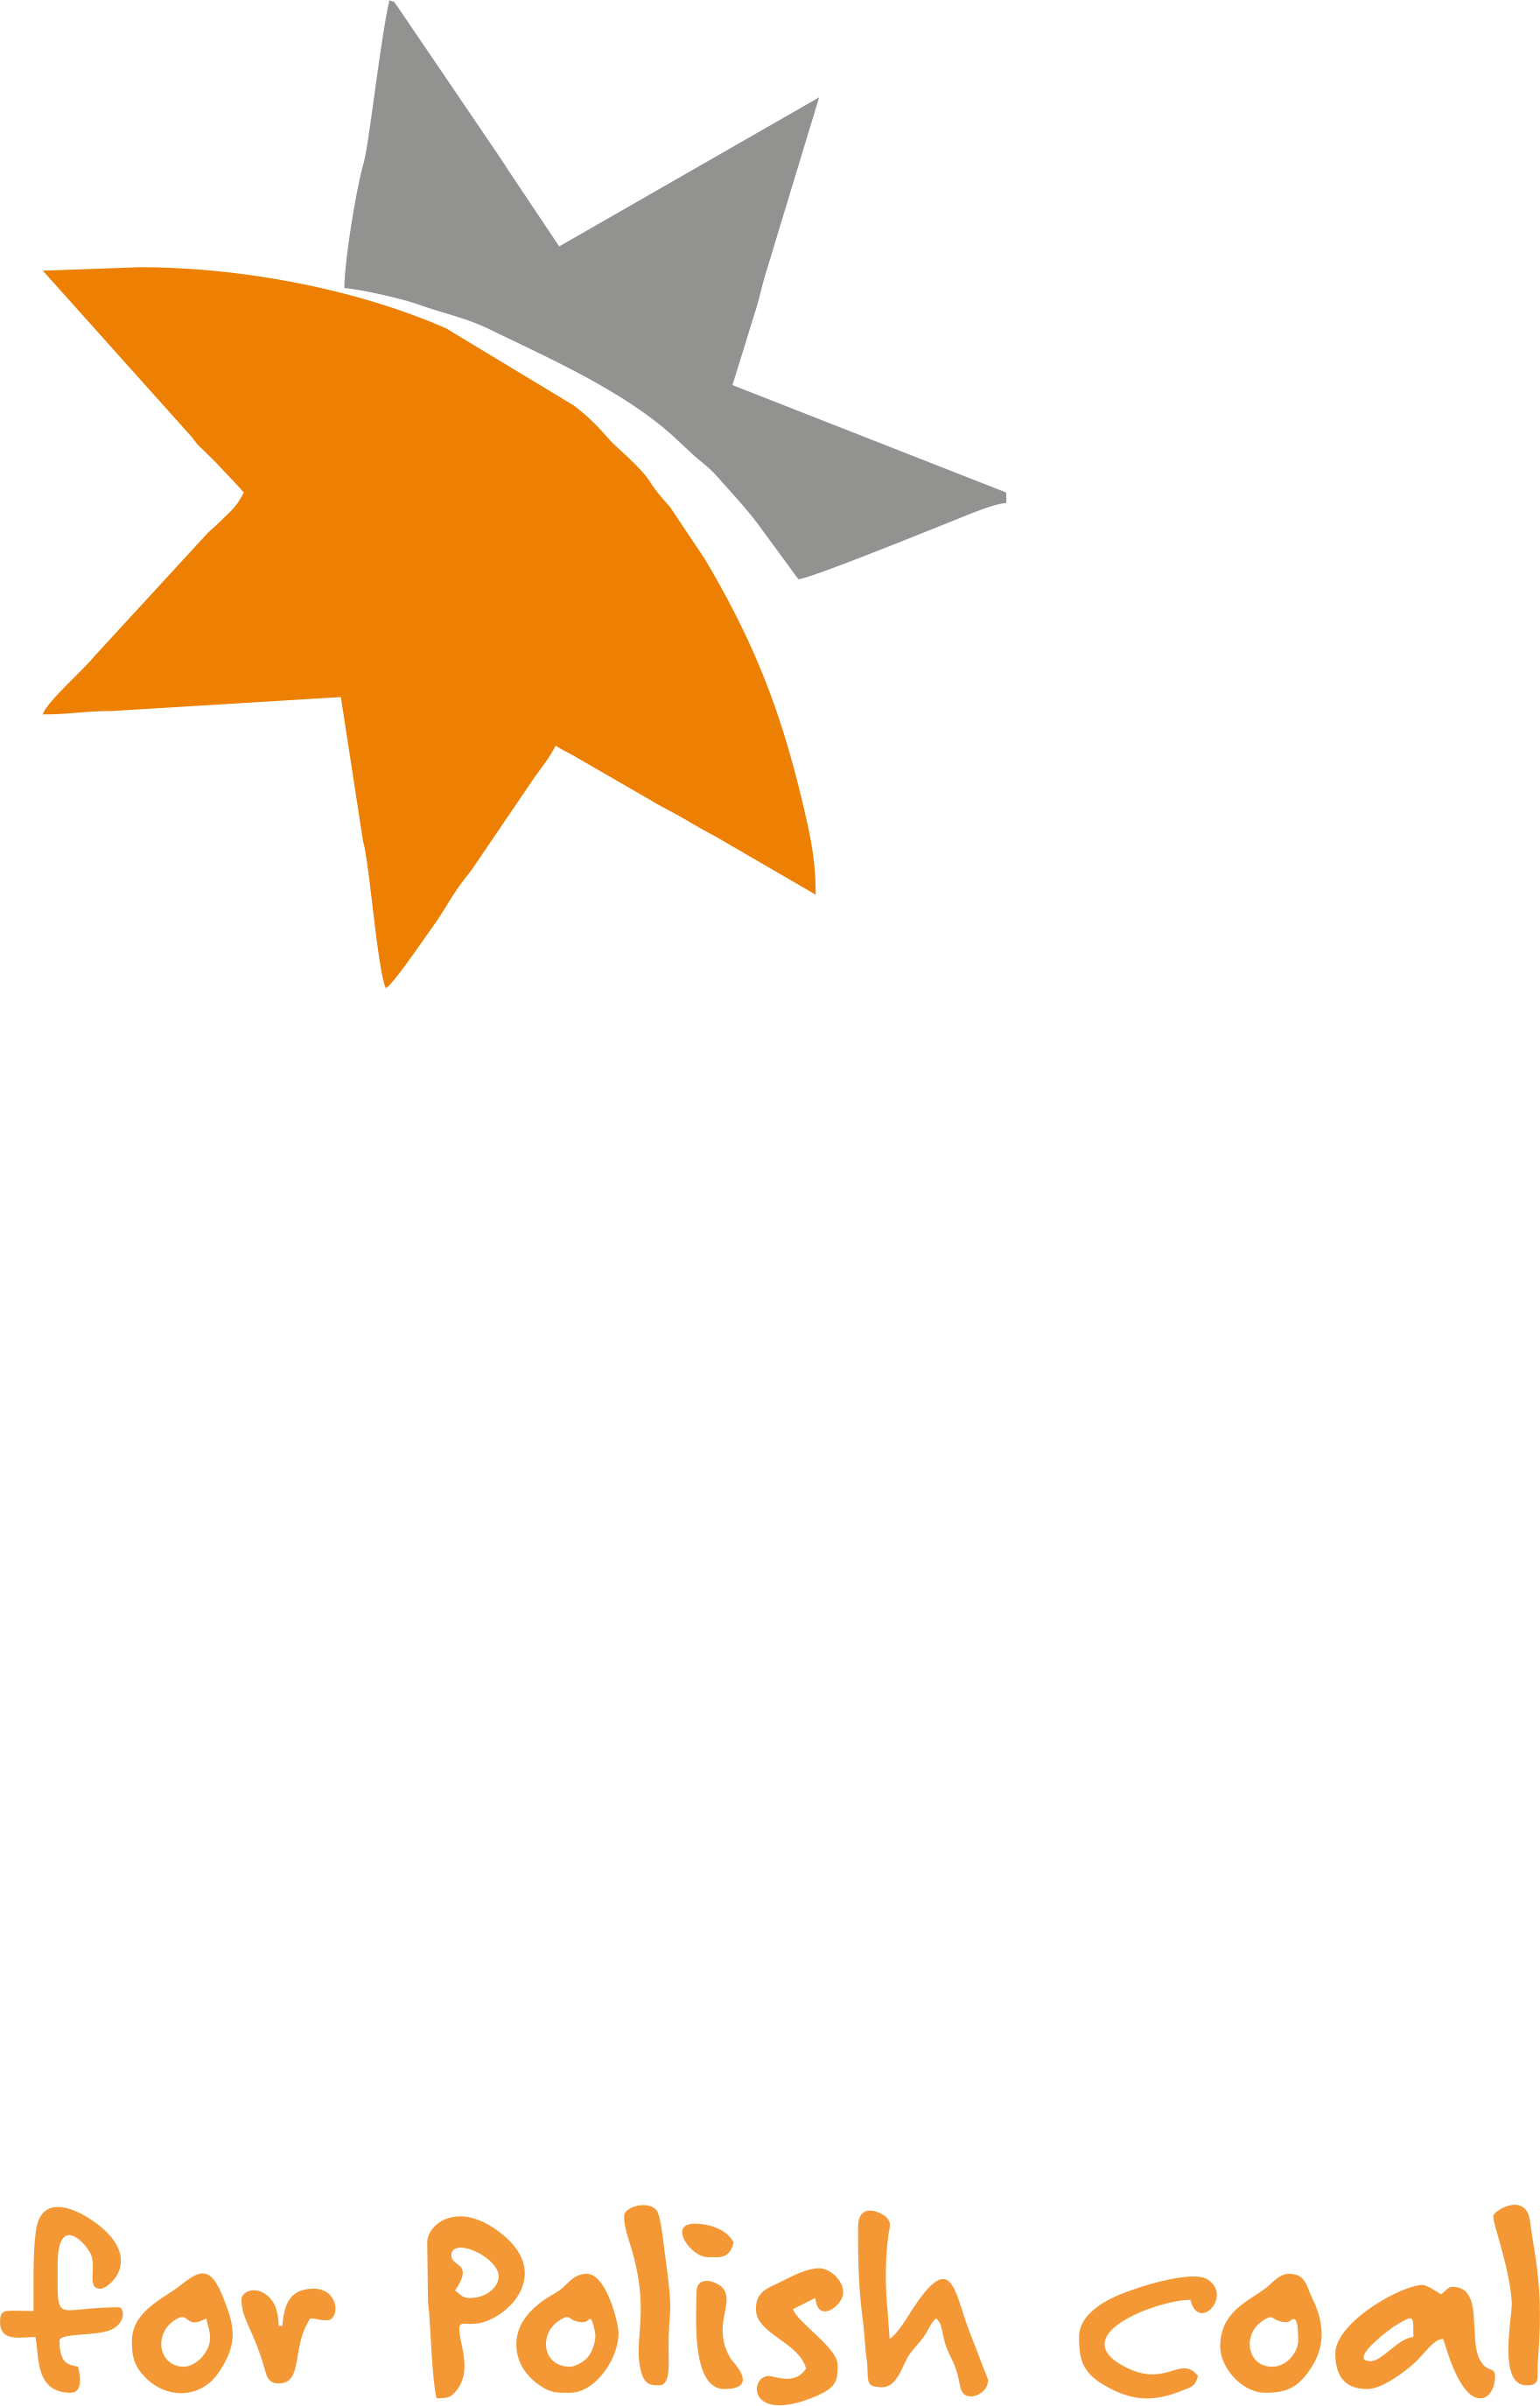 balamara | Balamara Resources